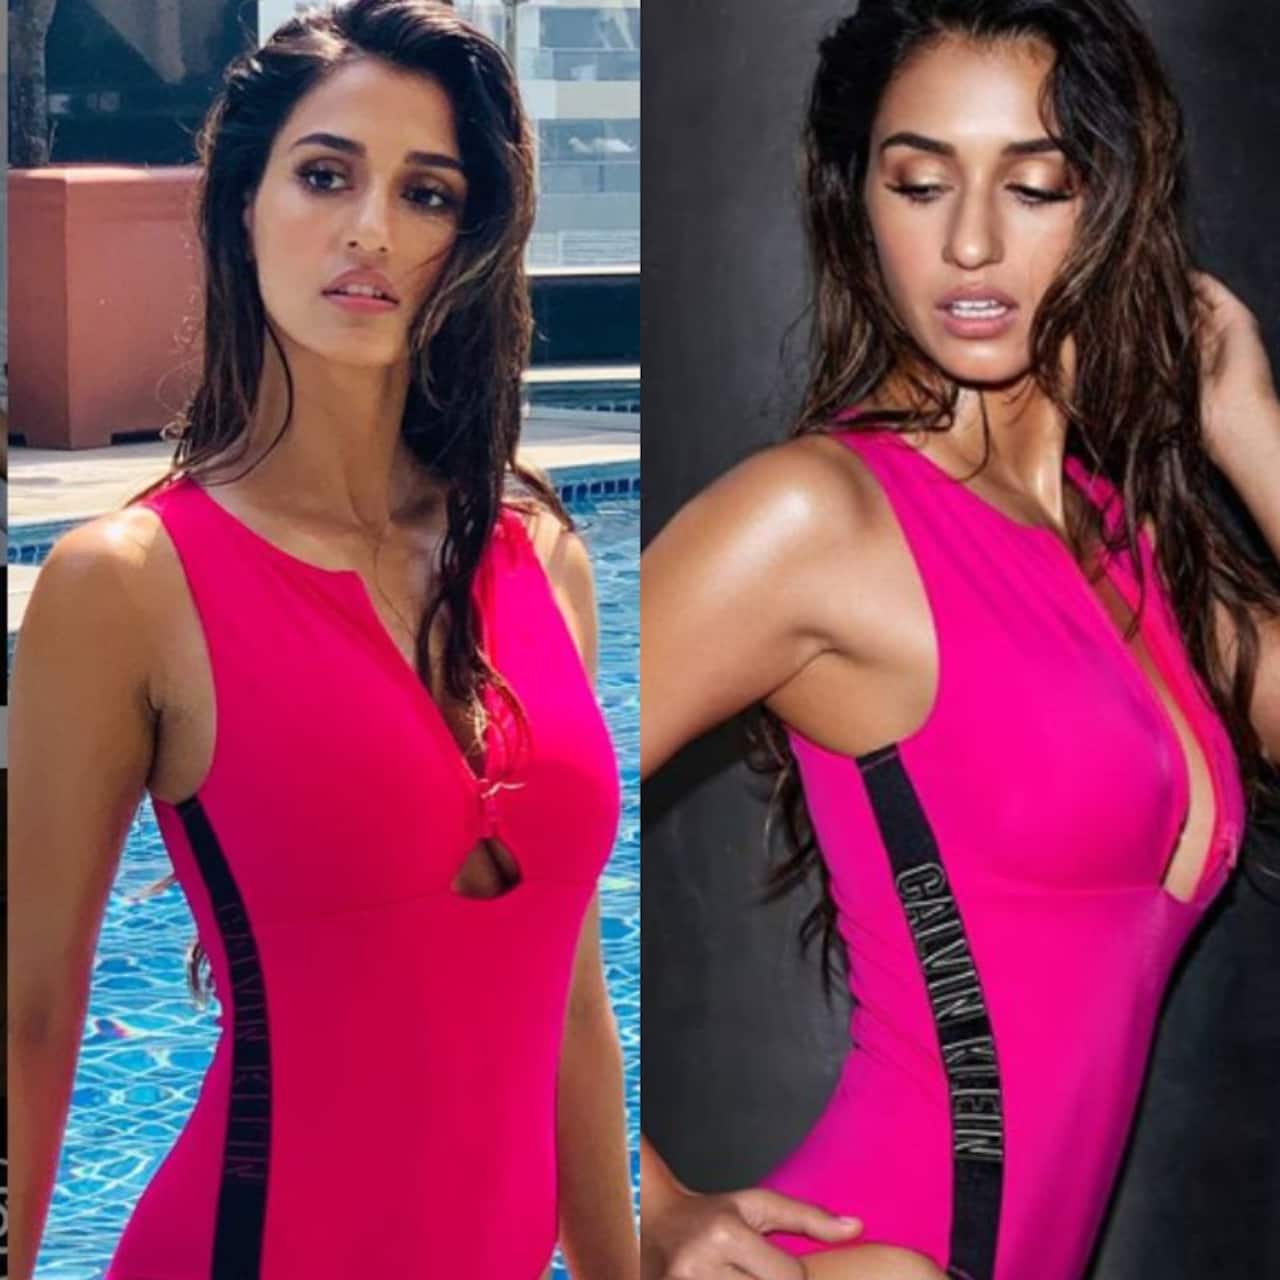 Disha Patani BEATS Kriti Sanon and Malaika Arora to be the hottest bikini beauty - view poll results